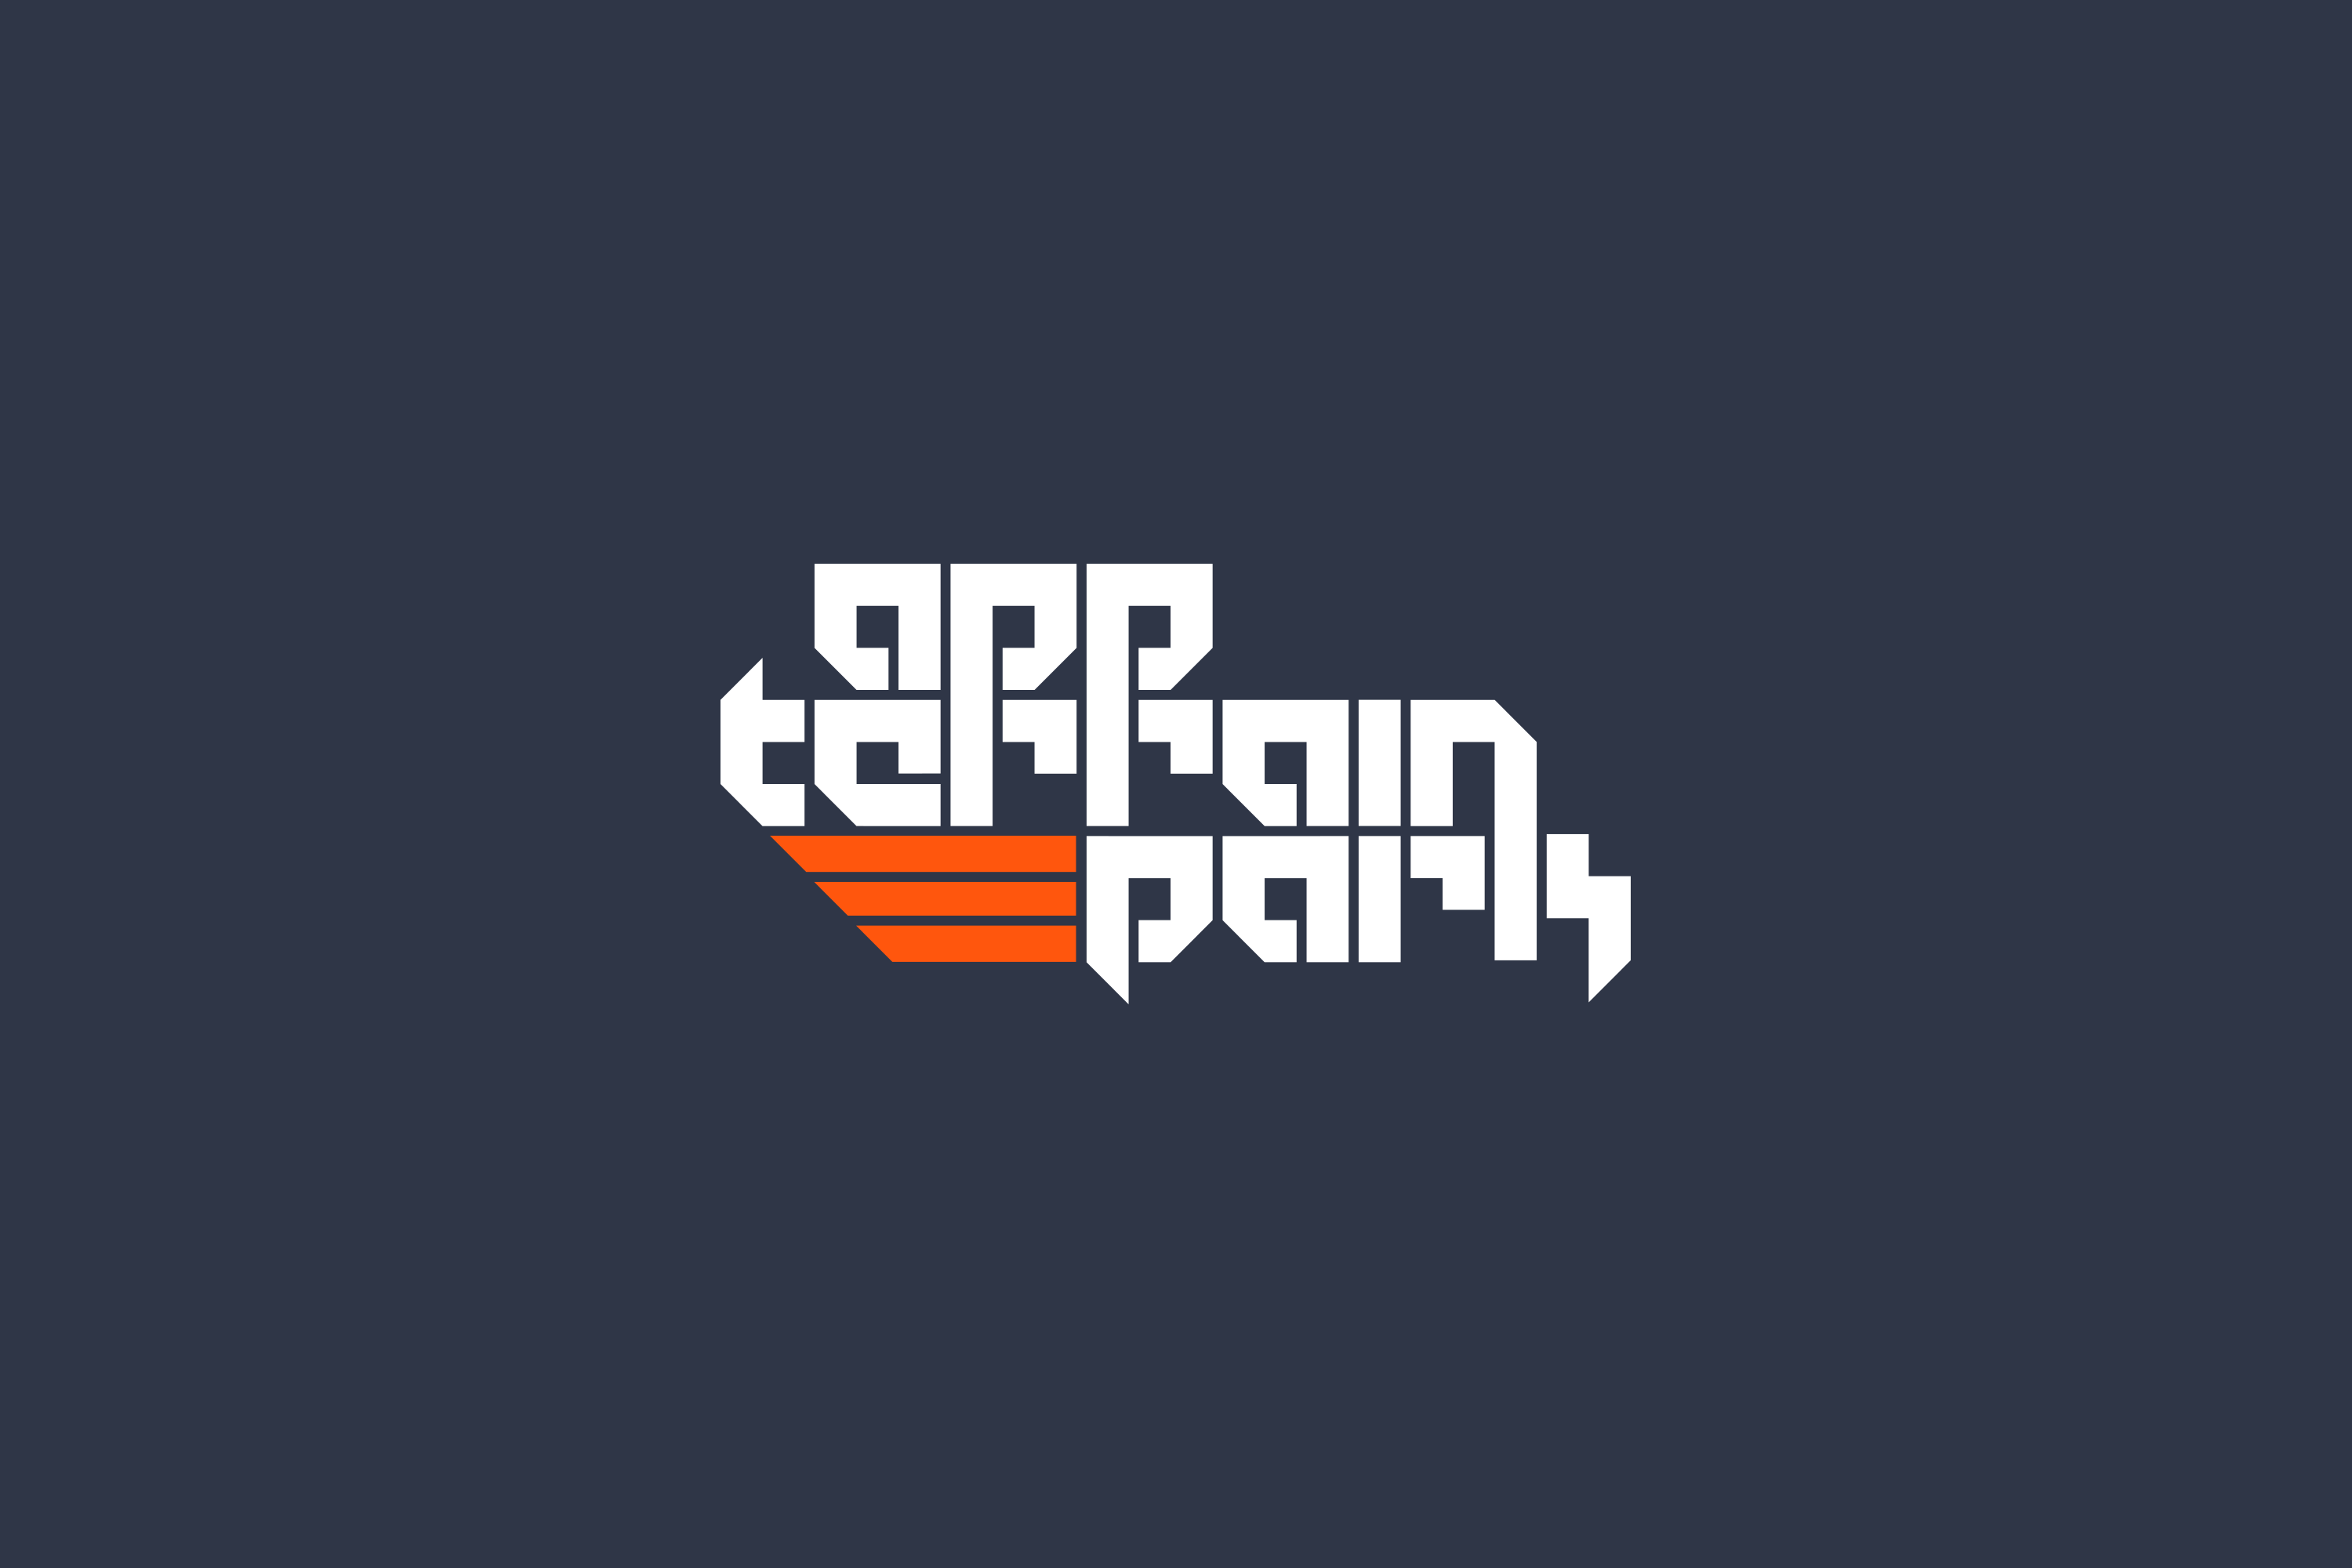 Chris-Reynolds-Logos-App-Terrain-Park-4